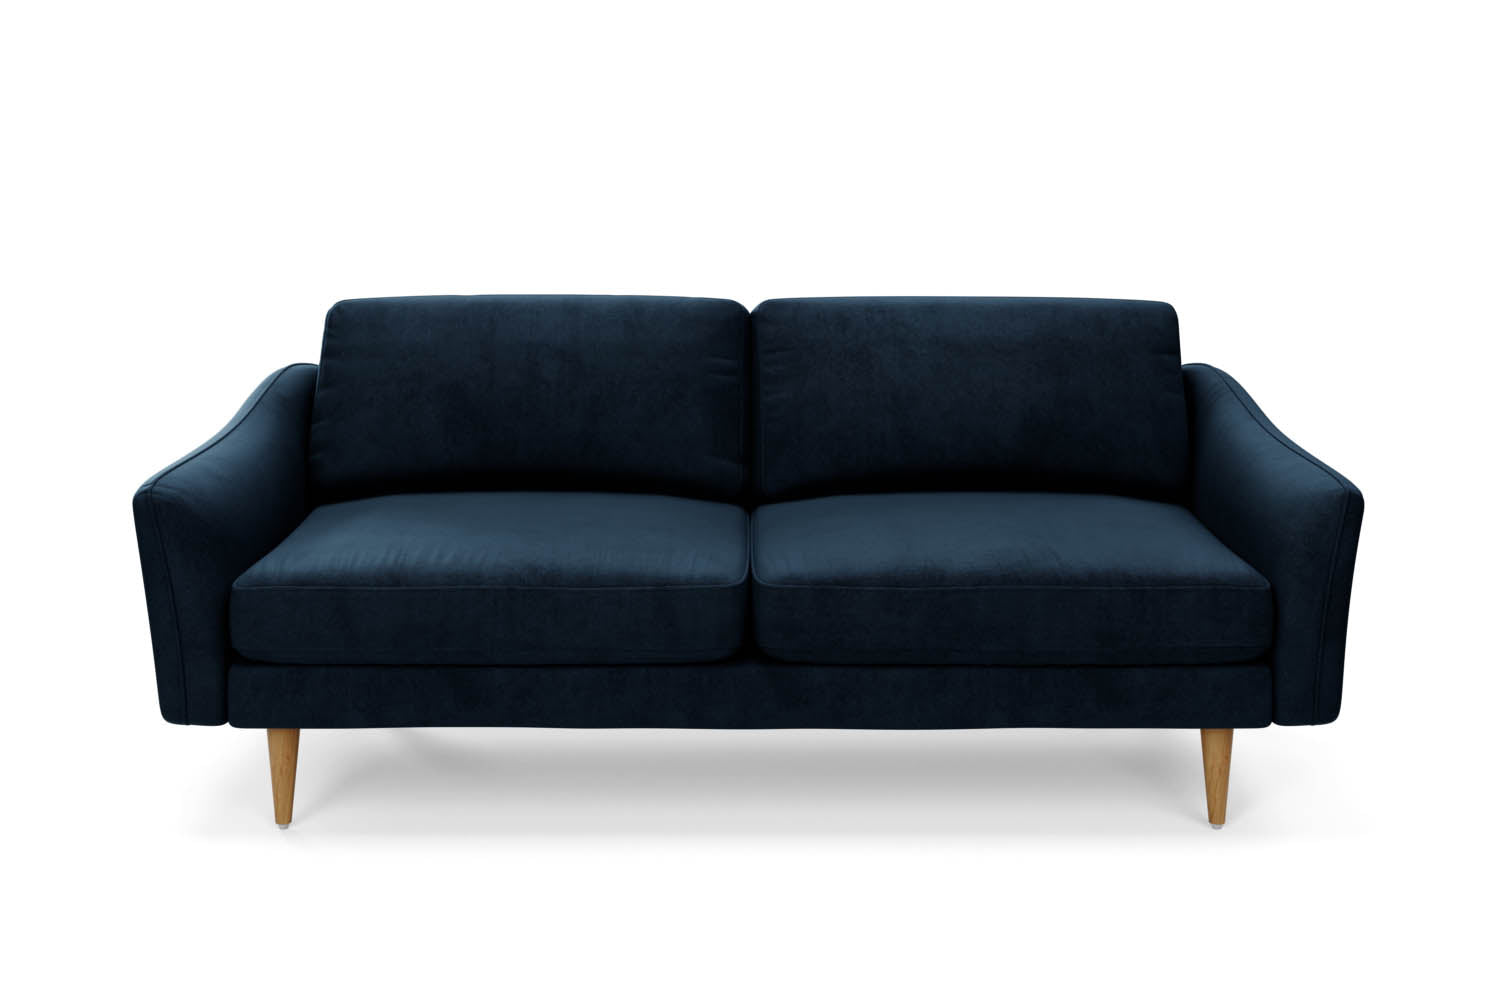 SNUG | The Rebel 3 Seater Sofa in Deep Blue variant_40837173968944